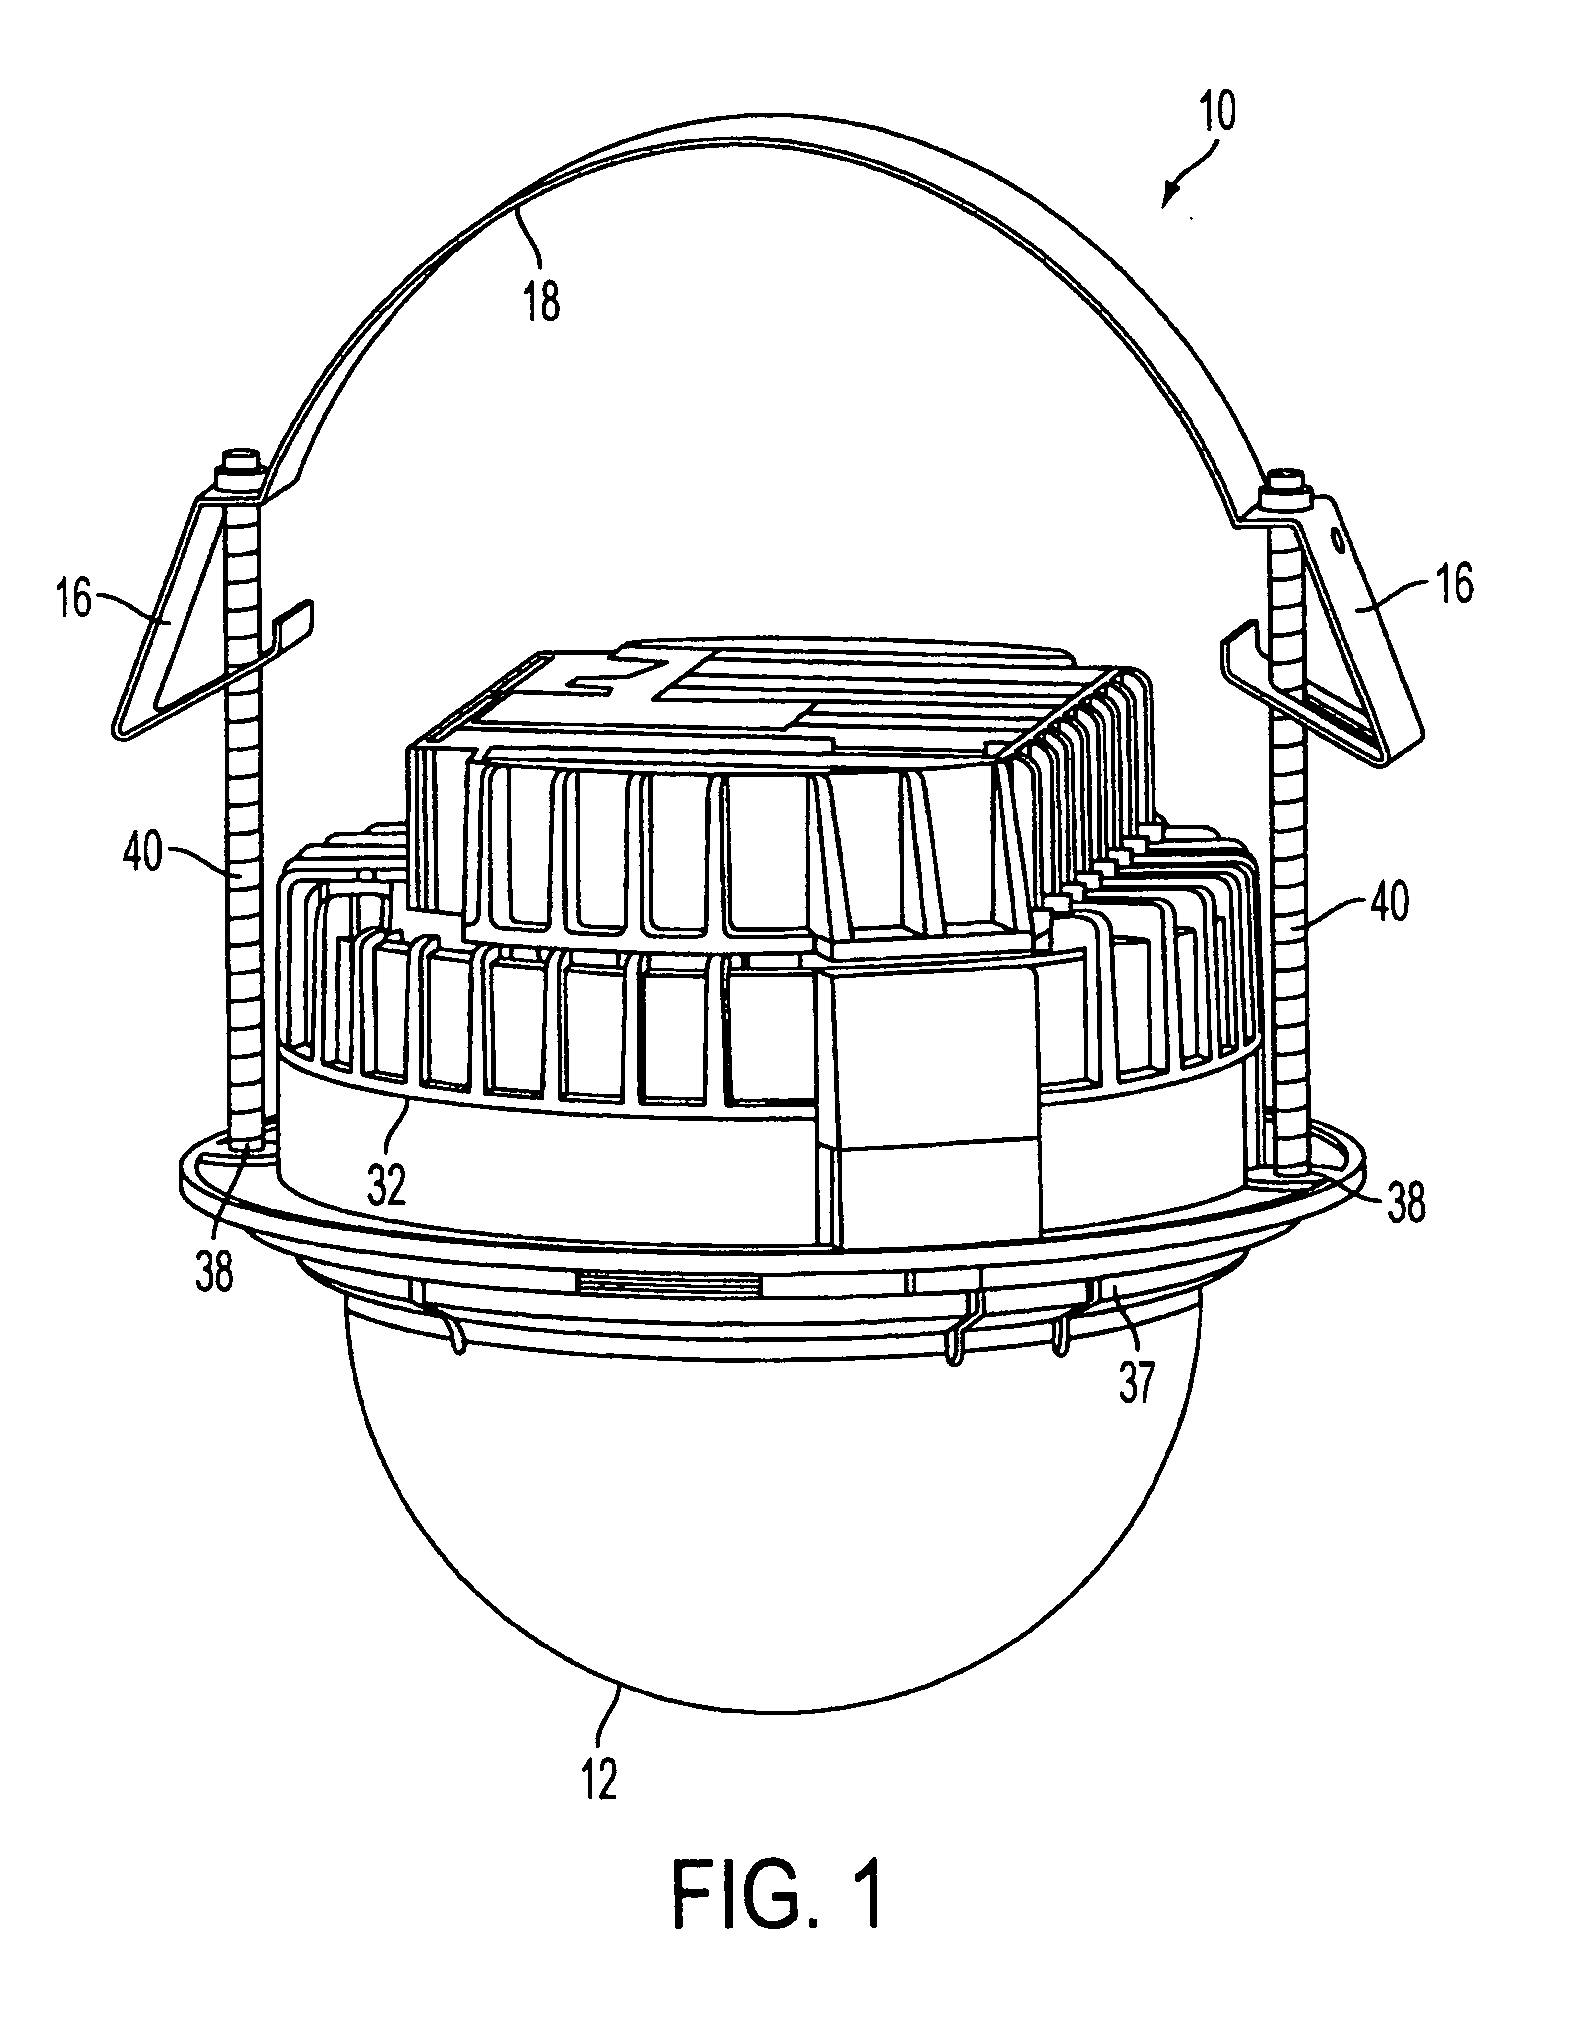 Apparatus for mounting a surveillance camera